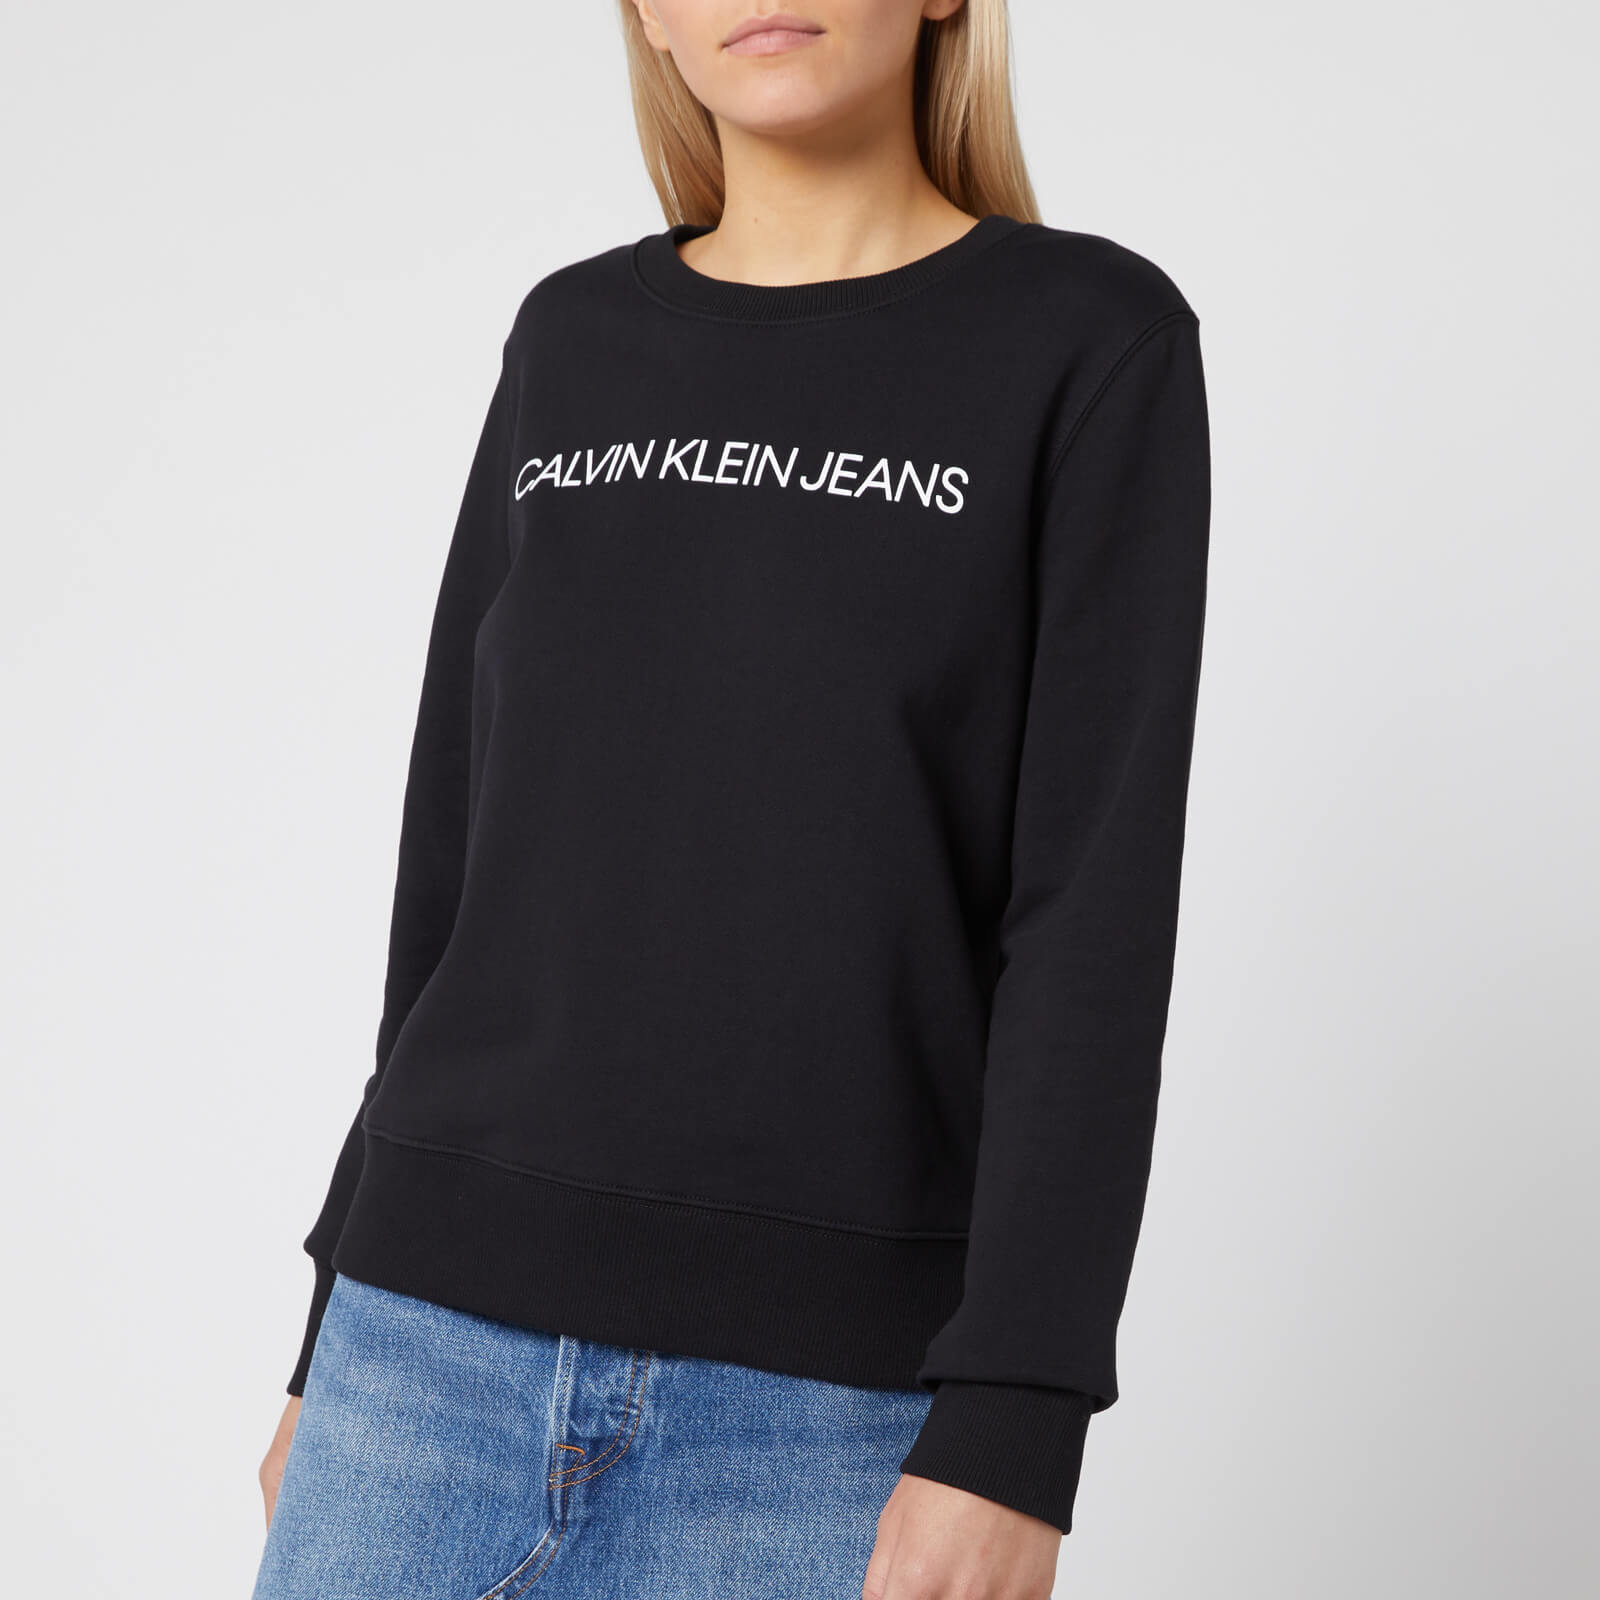 Calvin Klein Jeans Women's Institutional Core Logo Crew Neck Sweatshirt - CK Black - M